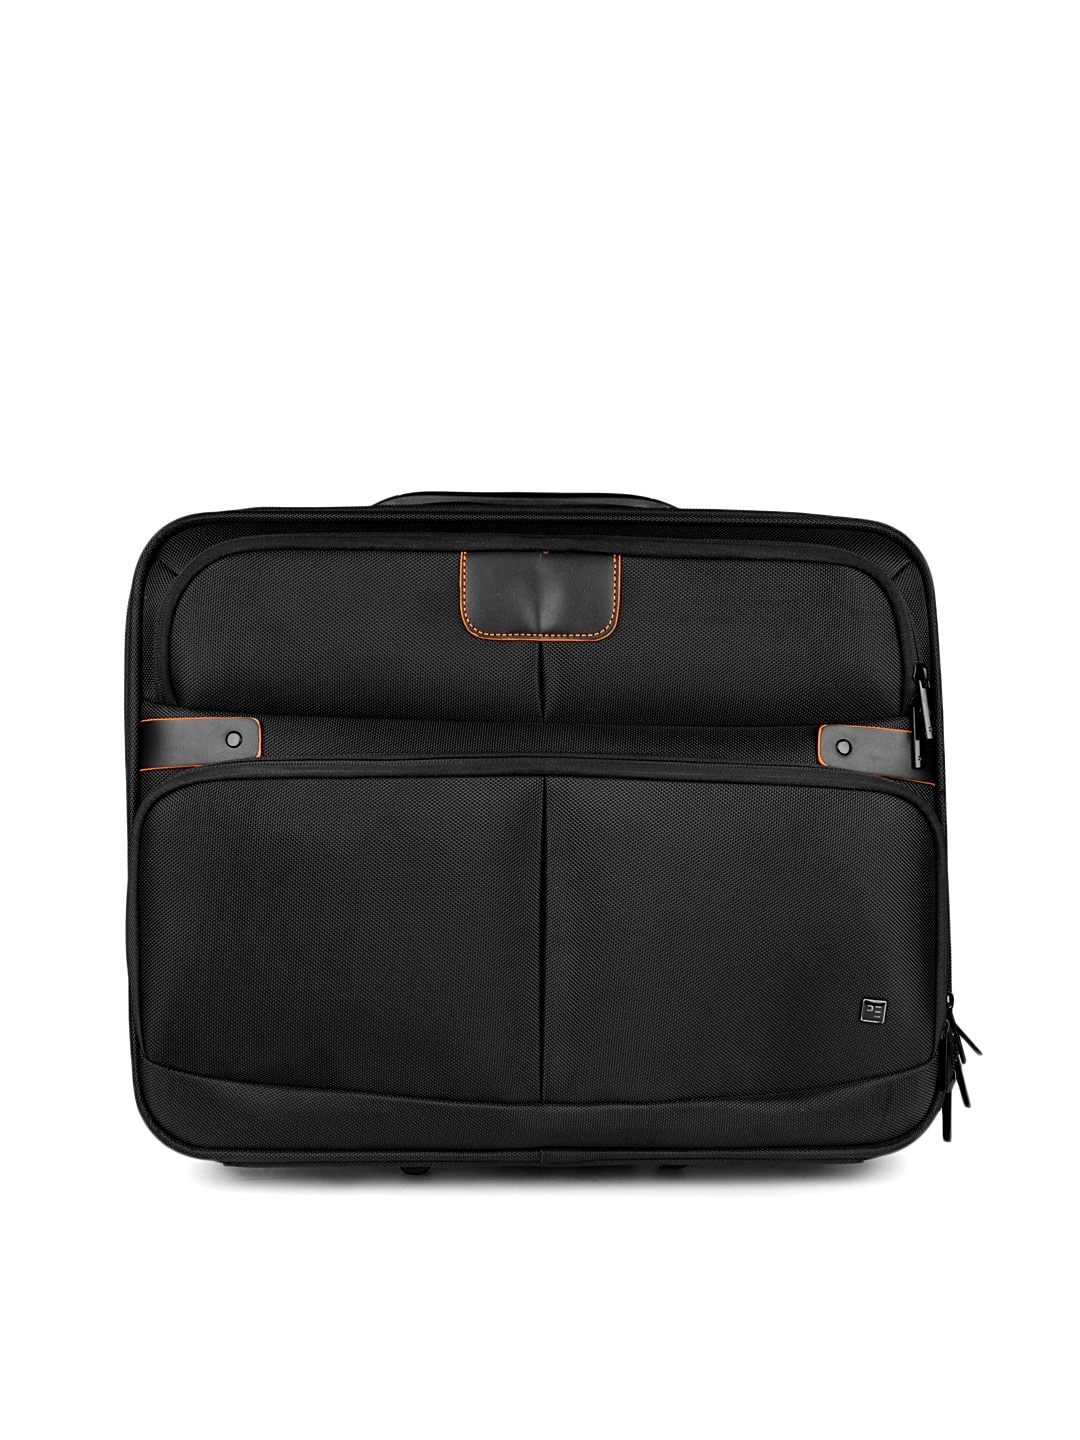 Peter England Unisex Black Bag